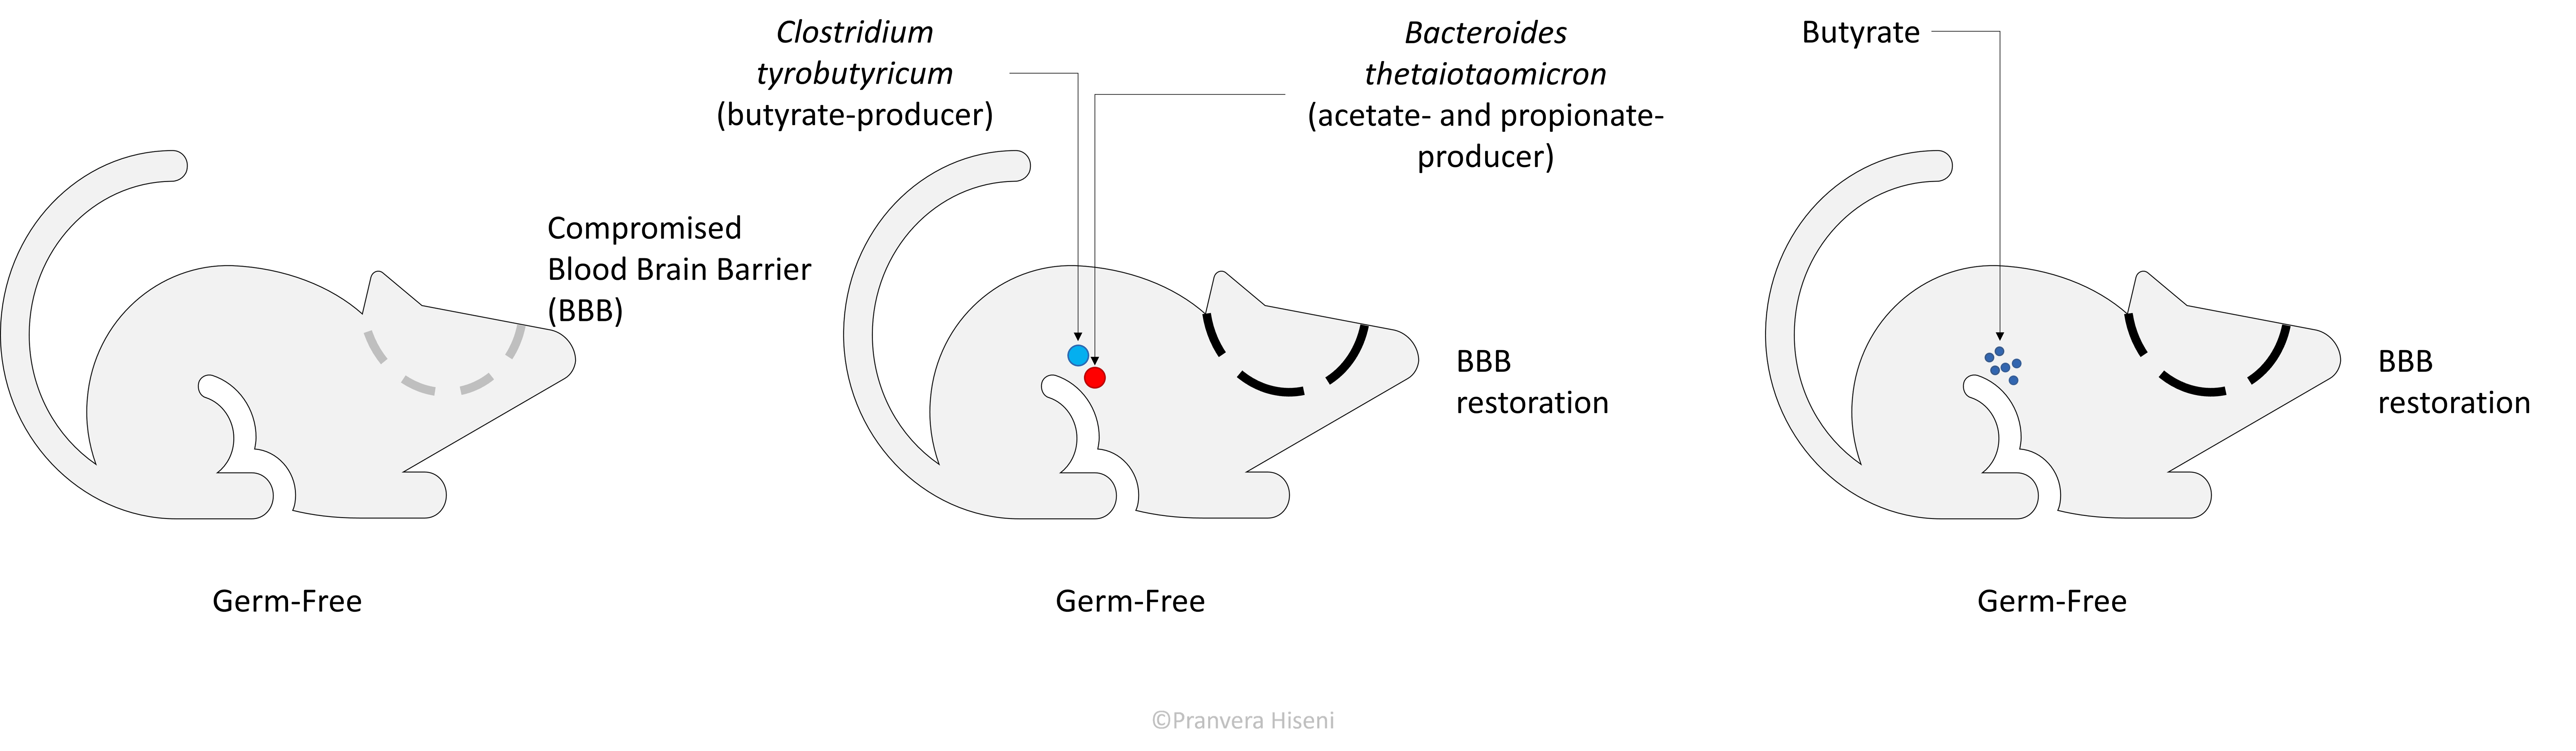 Germ-free mice illustration